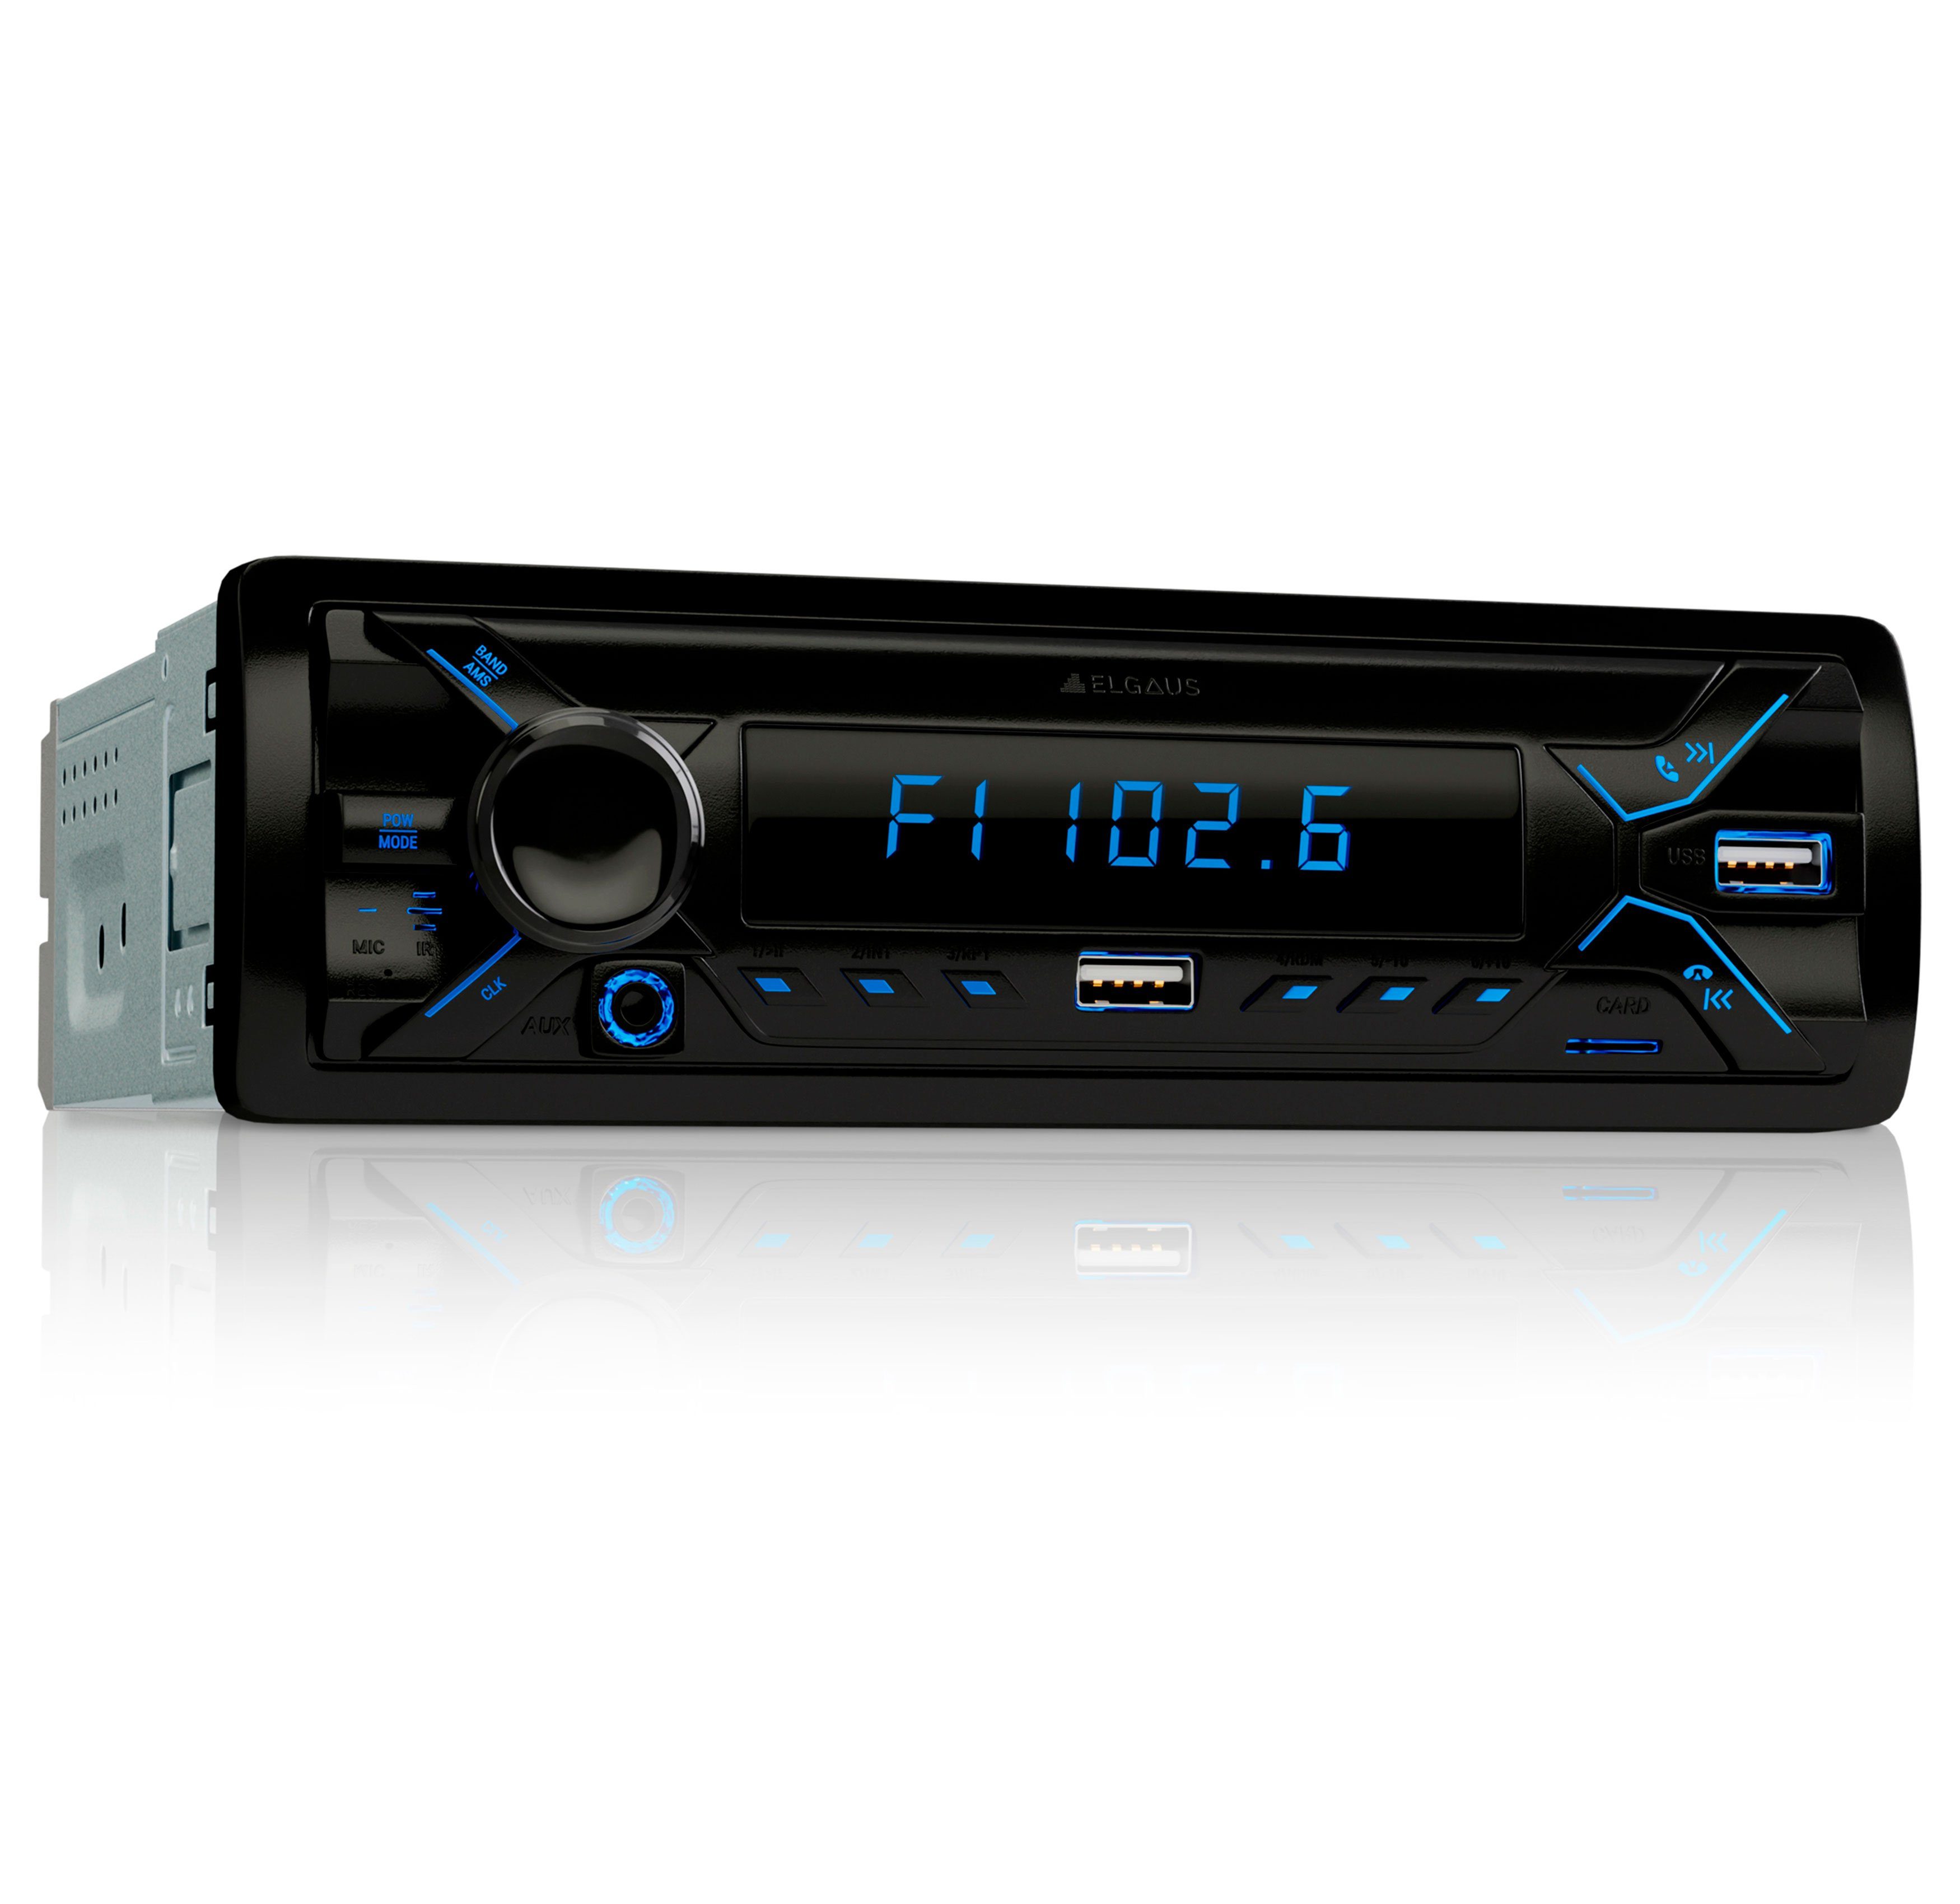 ELGAUS OM-195P 1 Din Autoradio (FM/AM, RDS, Bluetooth, RDS, Fernbedienung, ID3, Appsteuerung, Manual in DE/EN) | Autoradios